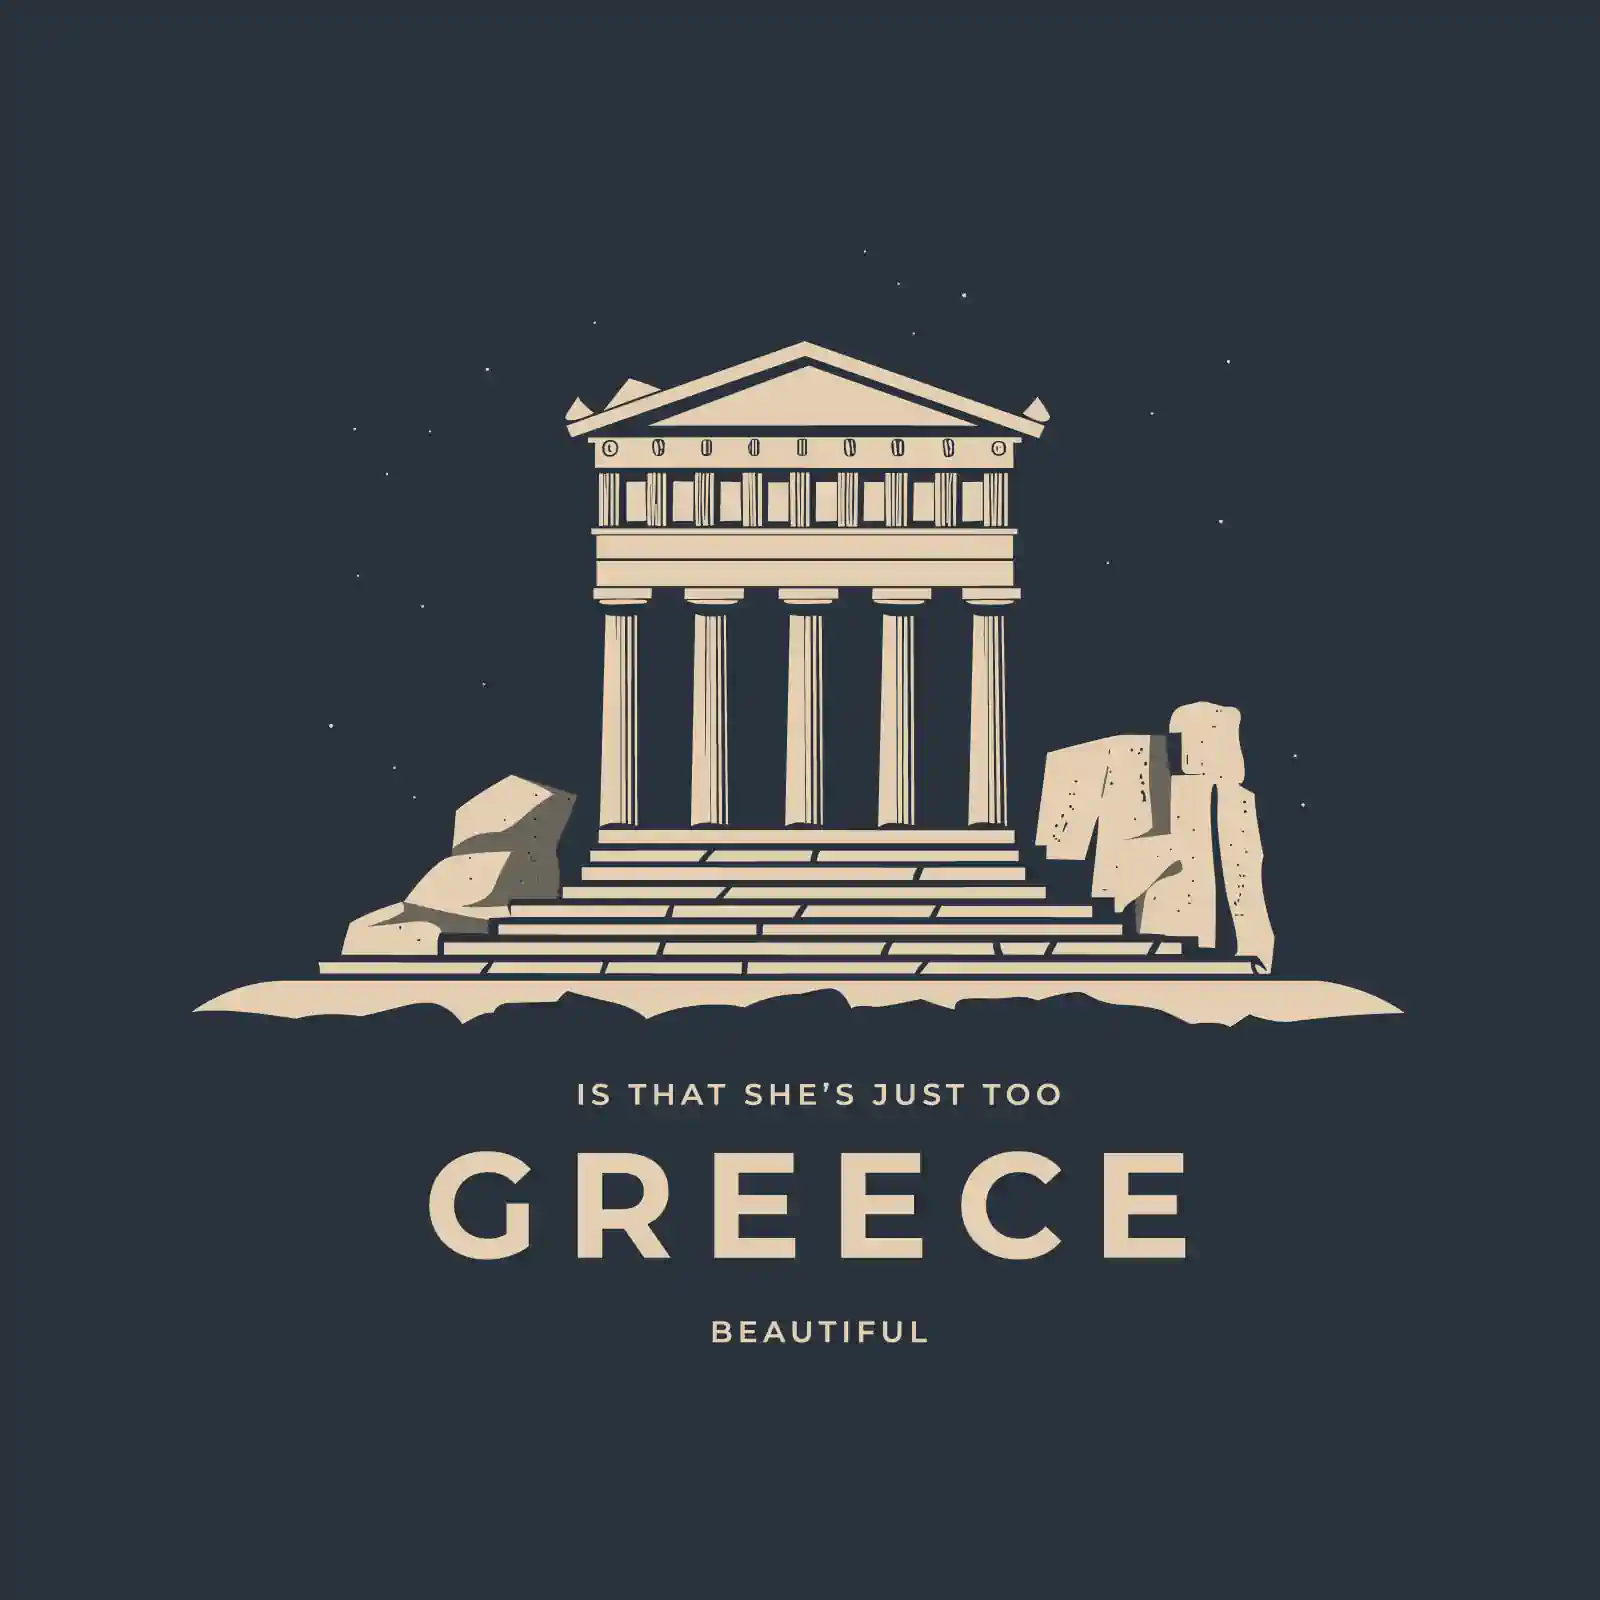 Greece, the parthenon temple